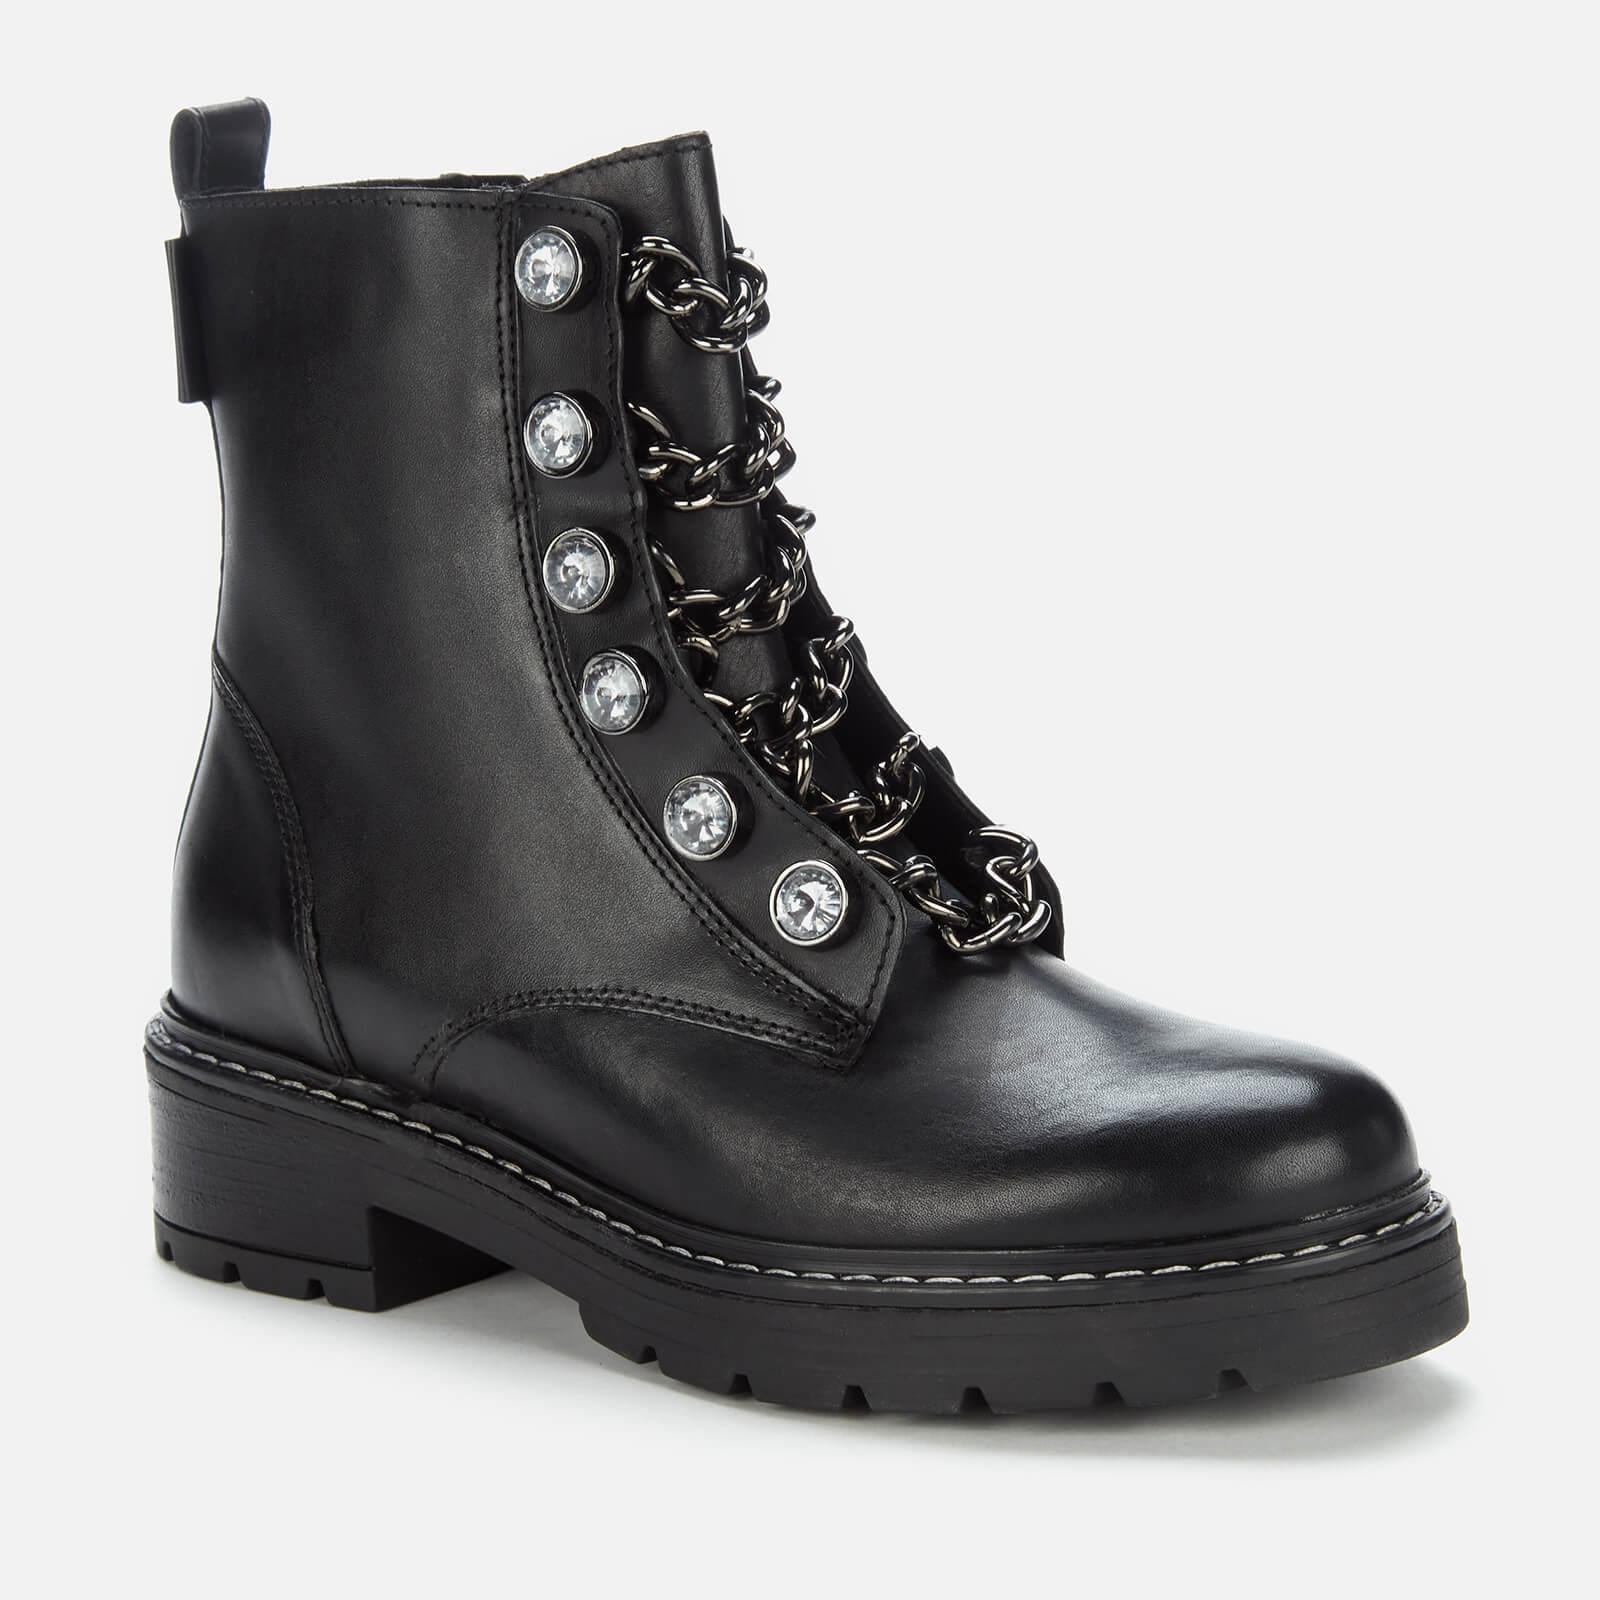 Kurt Geiger Bax 2 Leather Boots in Black - Lyst